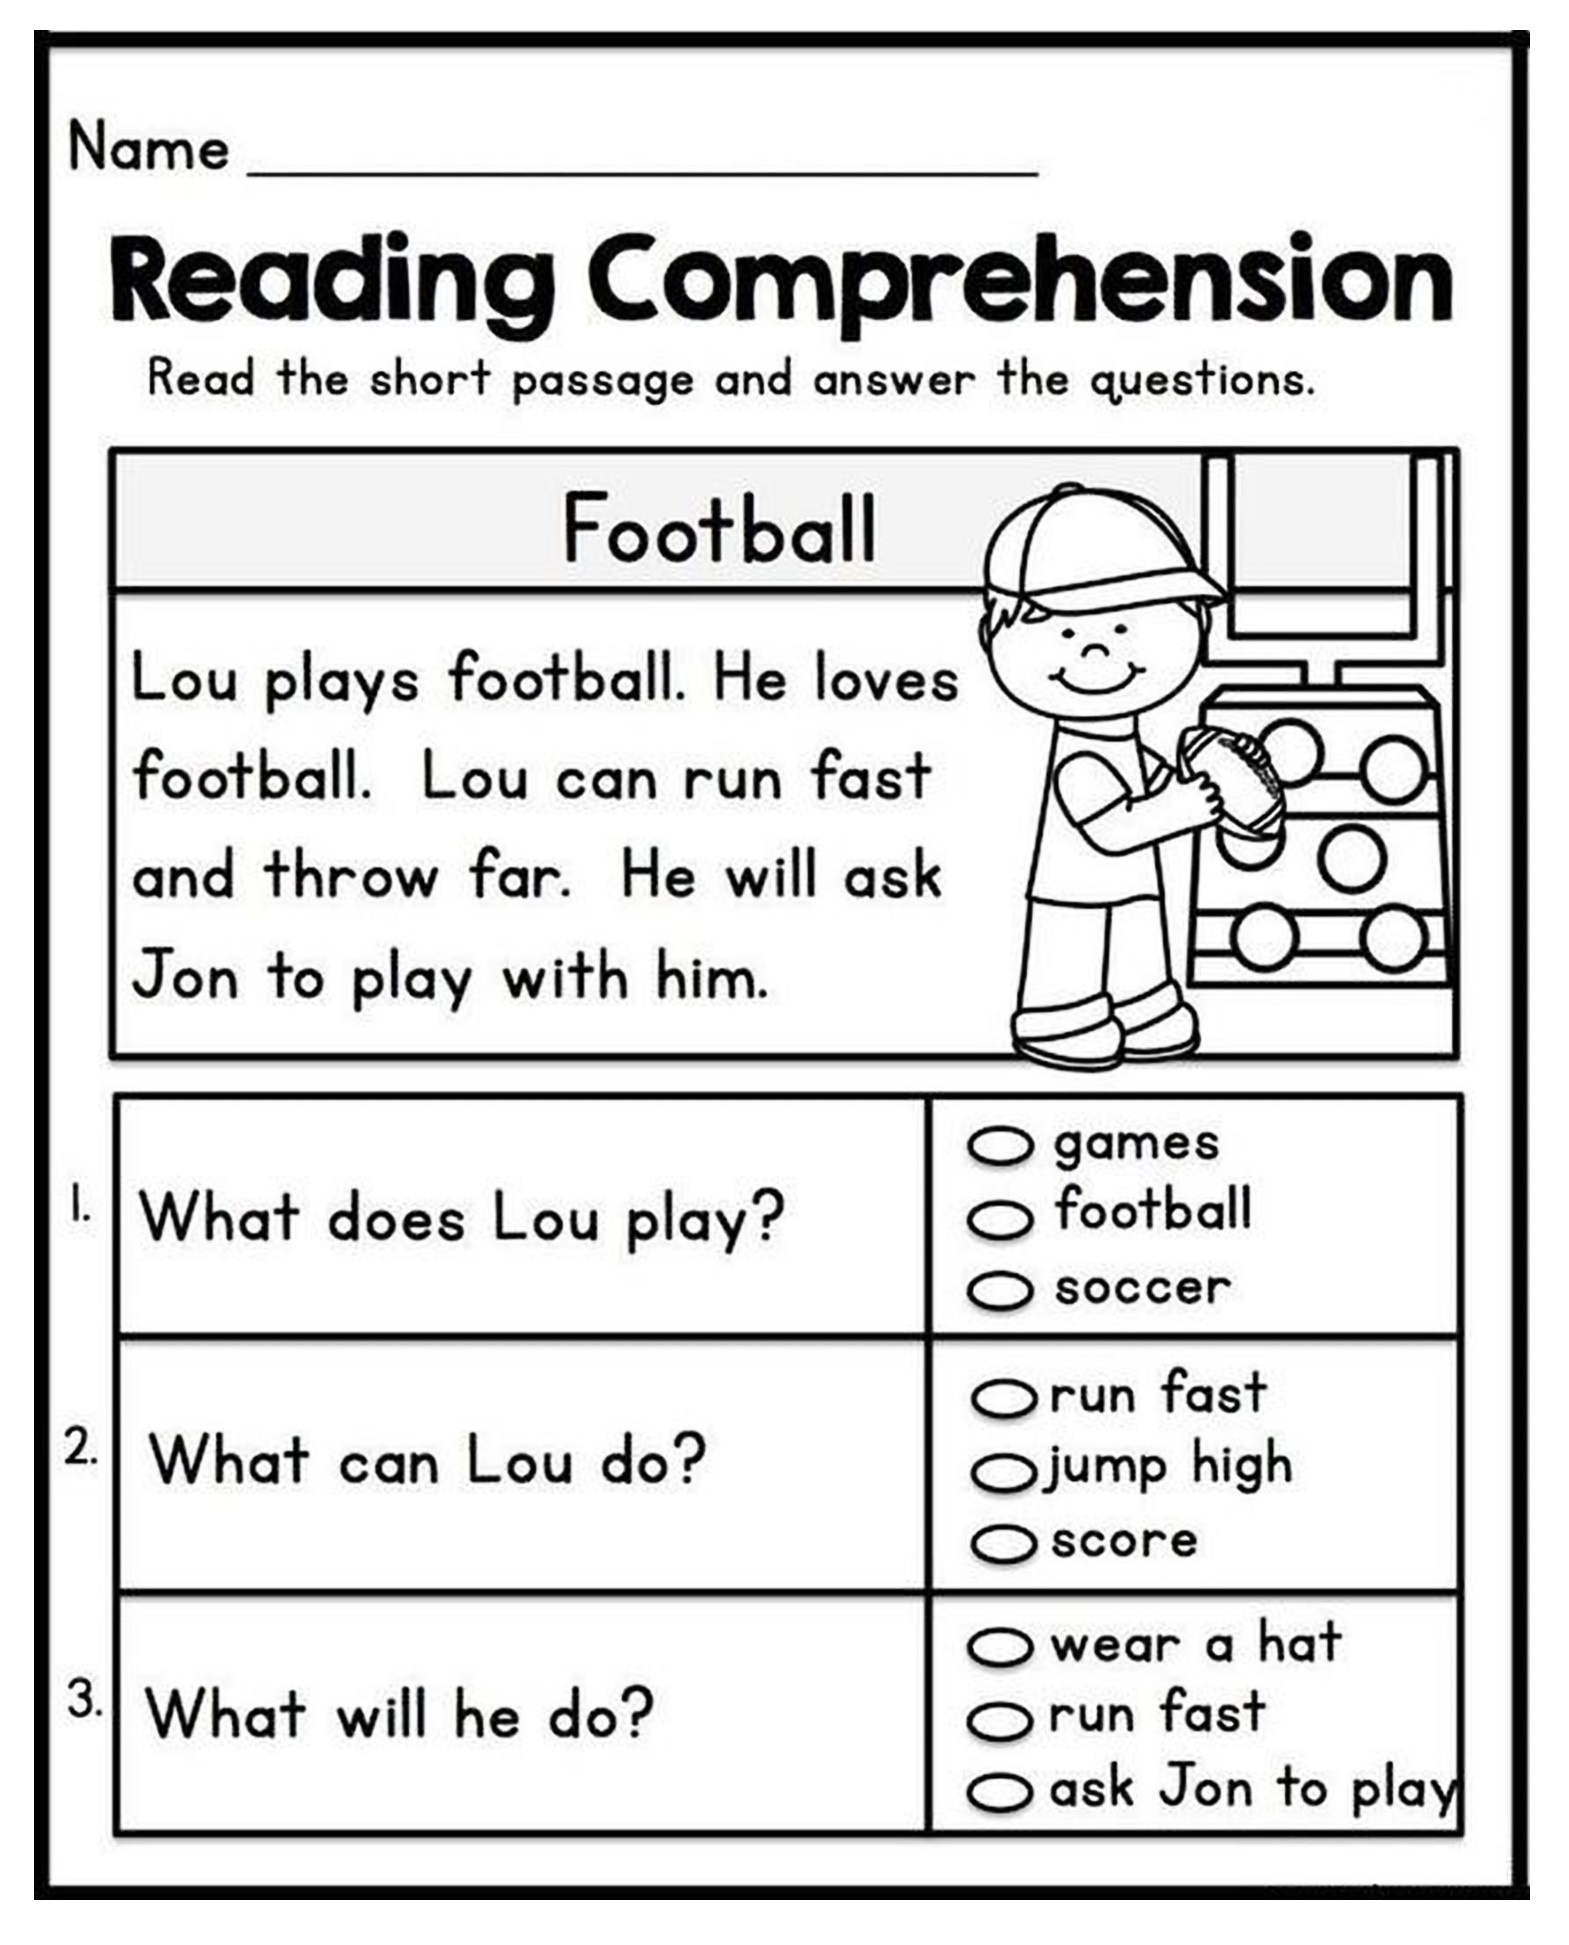 Free Printable Reading Comprehension Worksheets For 1St Grade